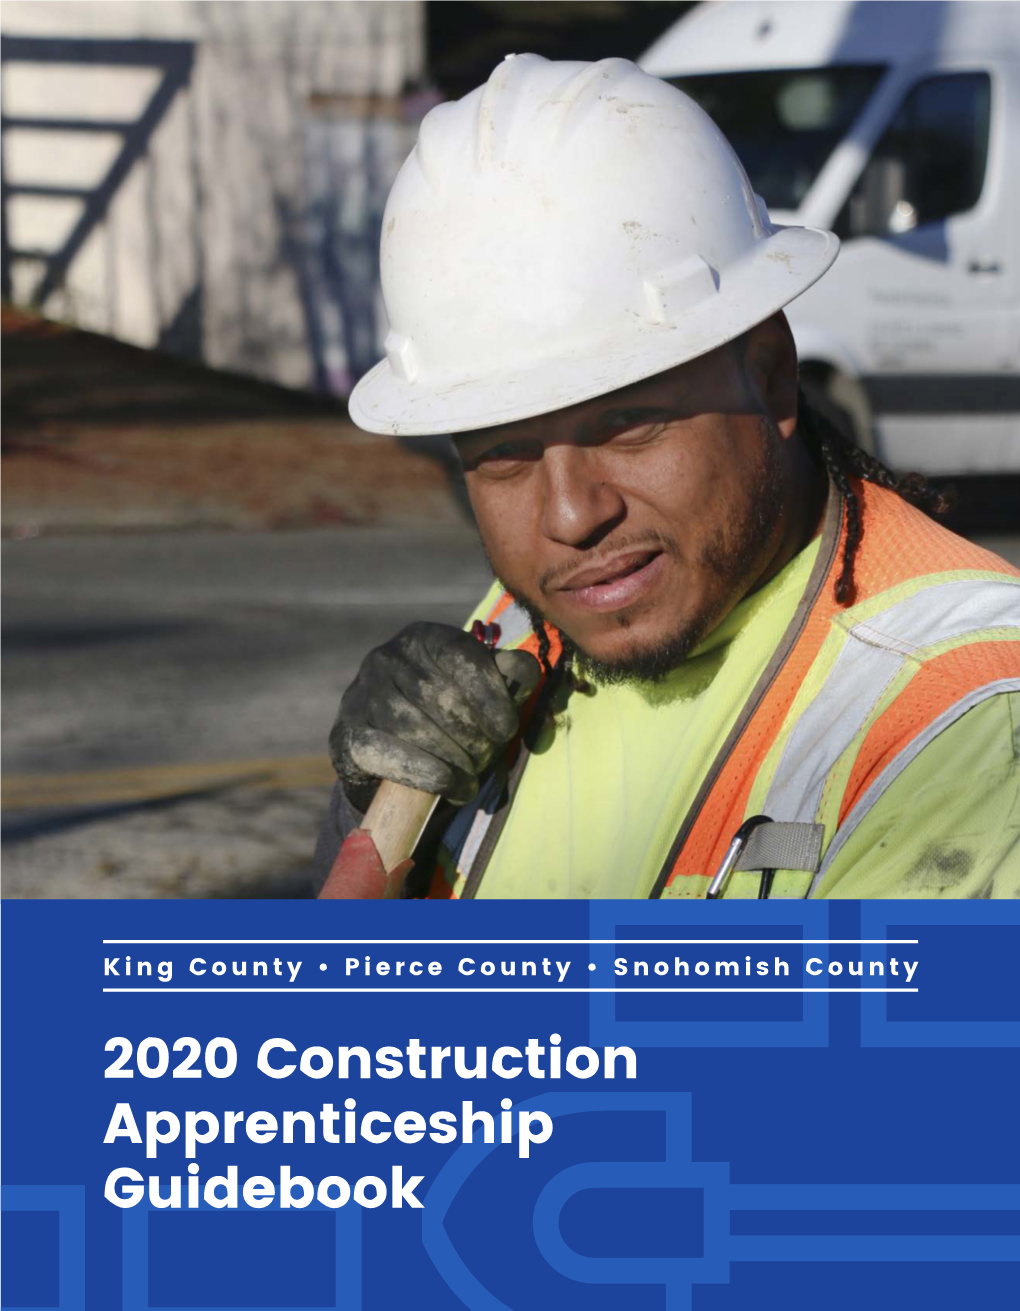 2020 Construction Apprenticeship Guidebook 1 2020 Construction Apprenticeship Guidebook